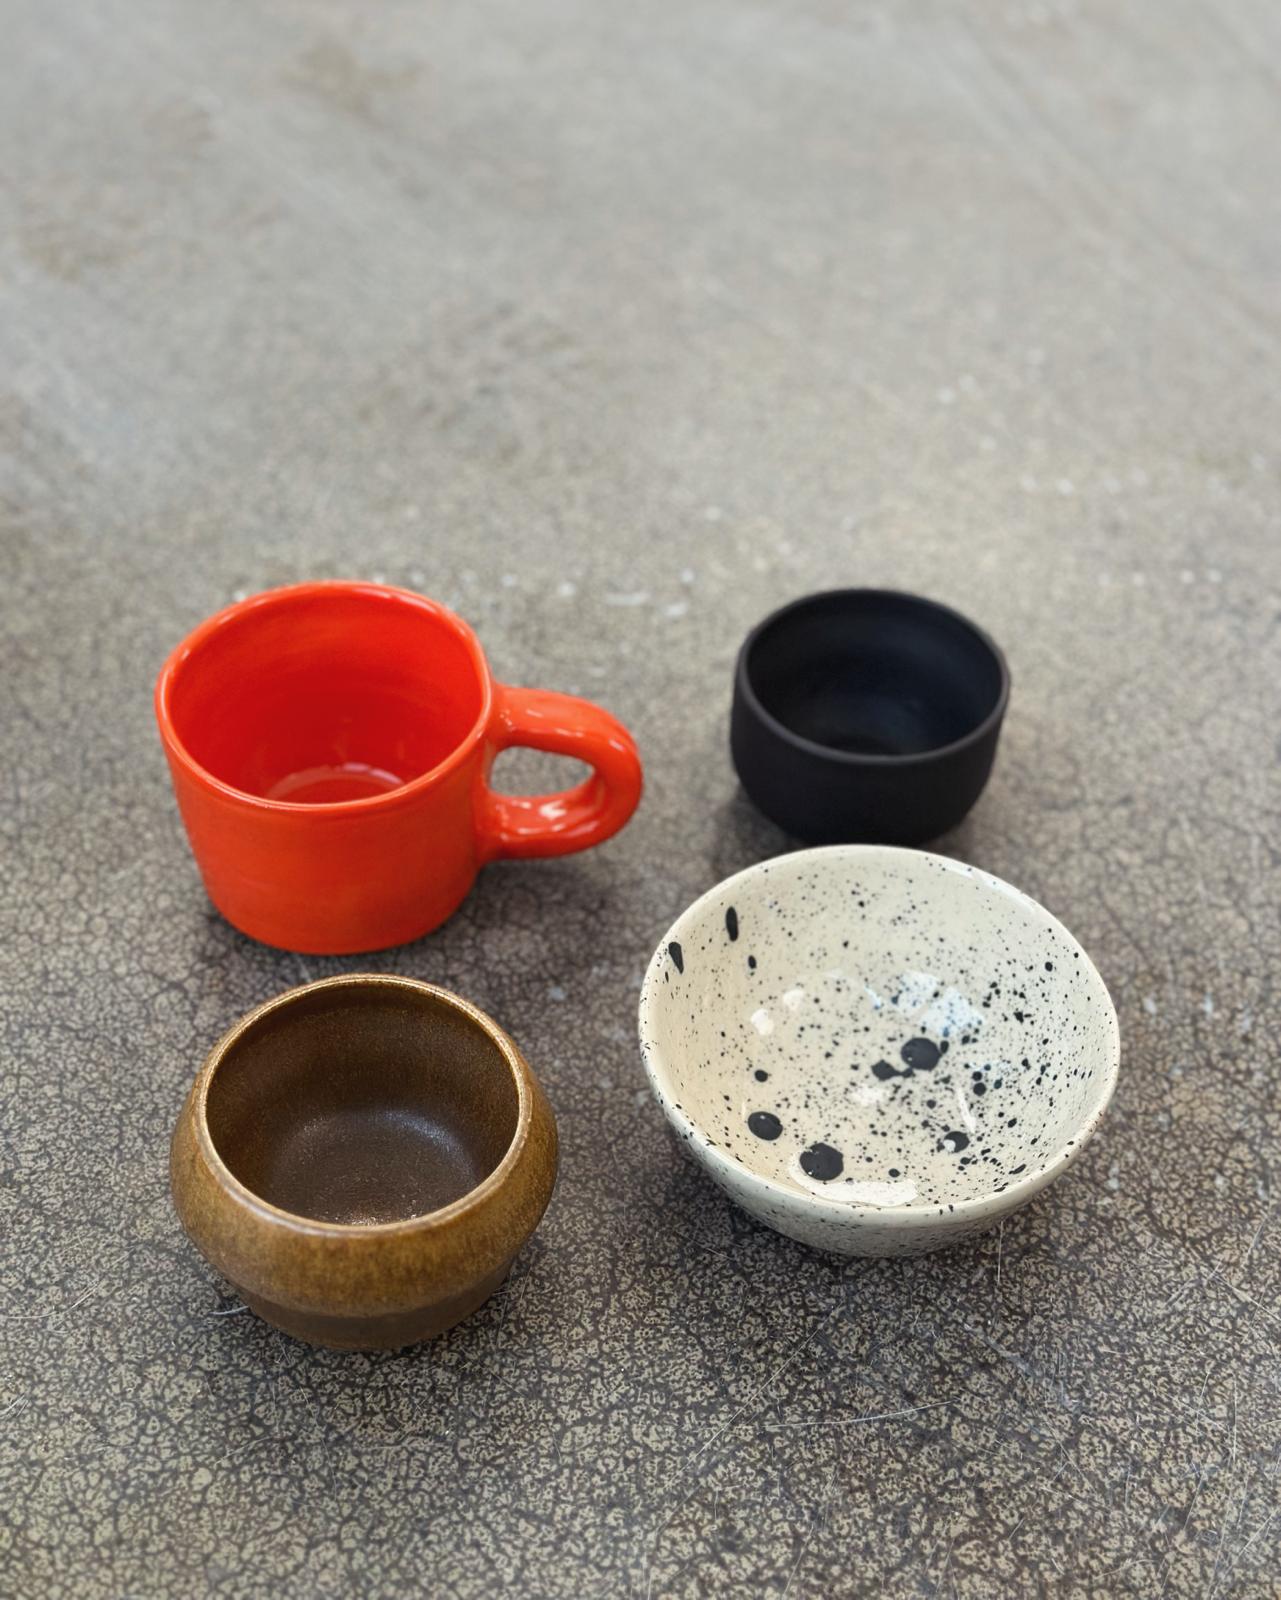 studioli!sa x wabi:sabi - the pottery studio 11./12.5